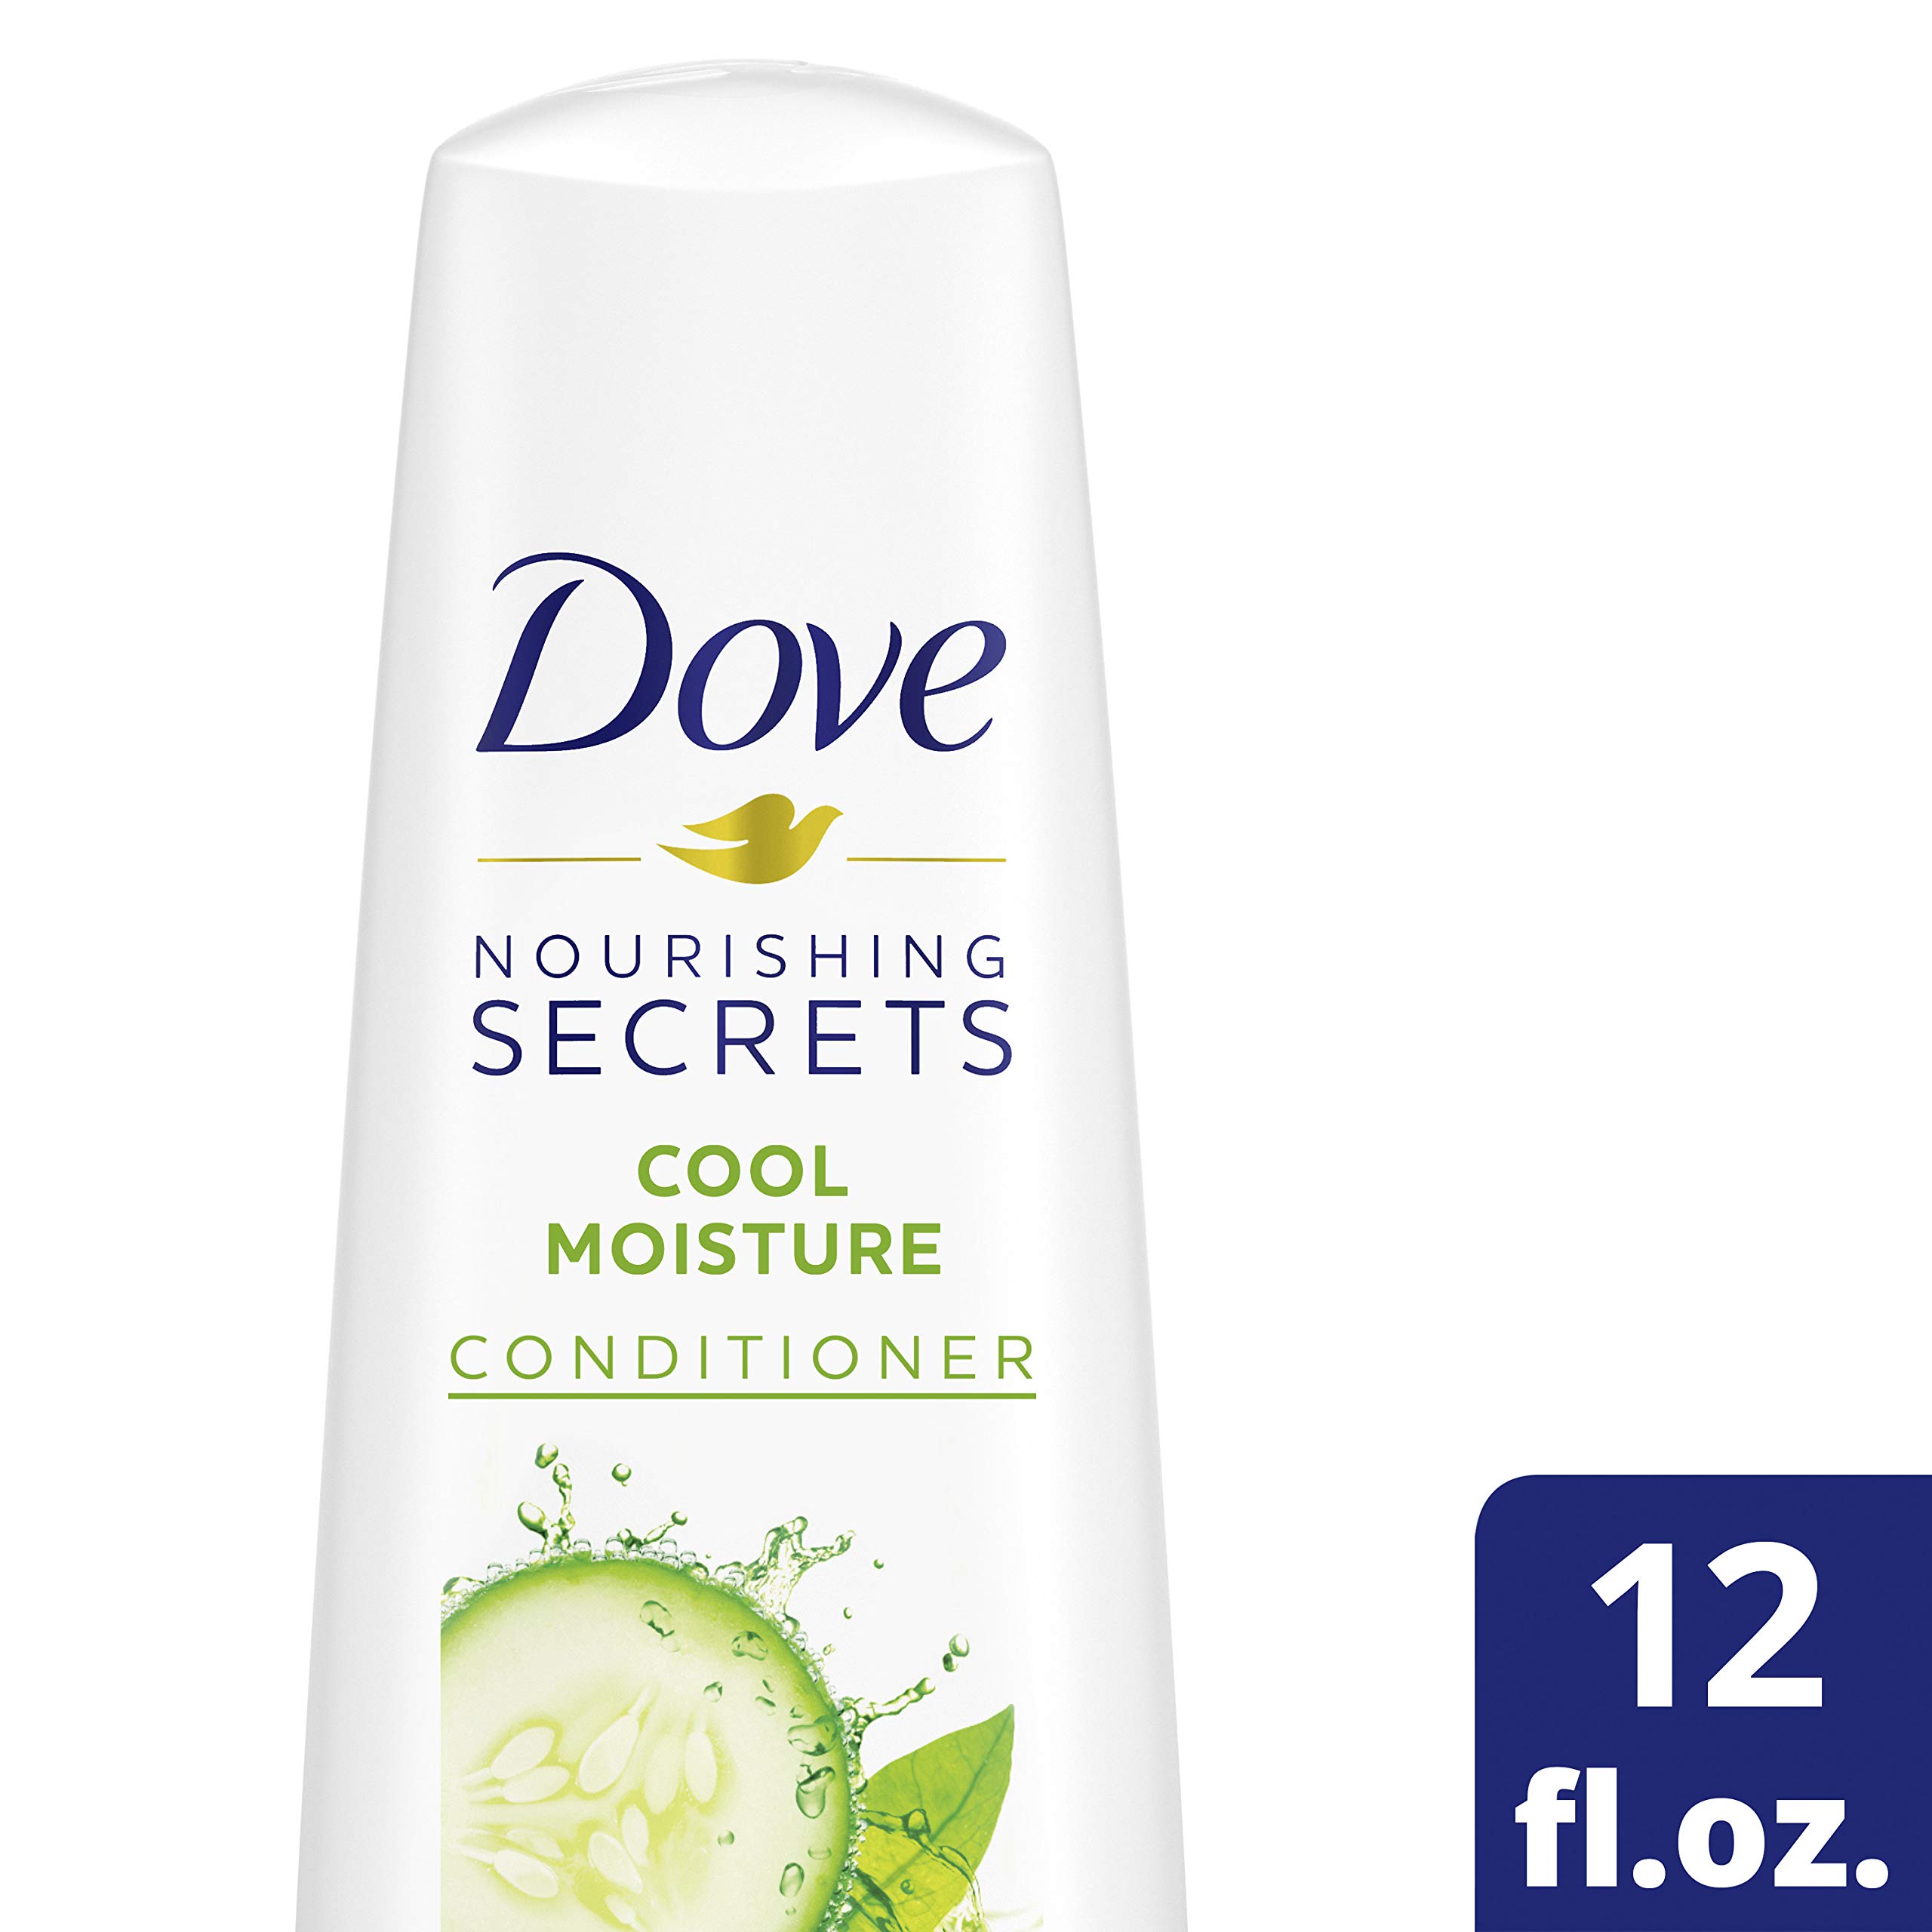 Dove Nourishing Secrets Conditioner, Conditioner, Pack of 1 Cool Moisture 12.0 Fl Oz